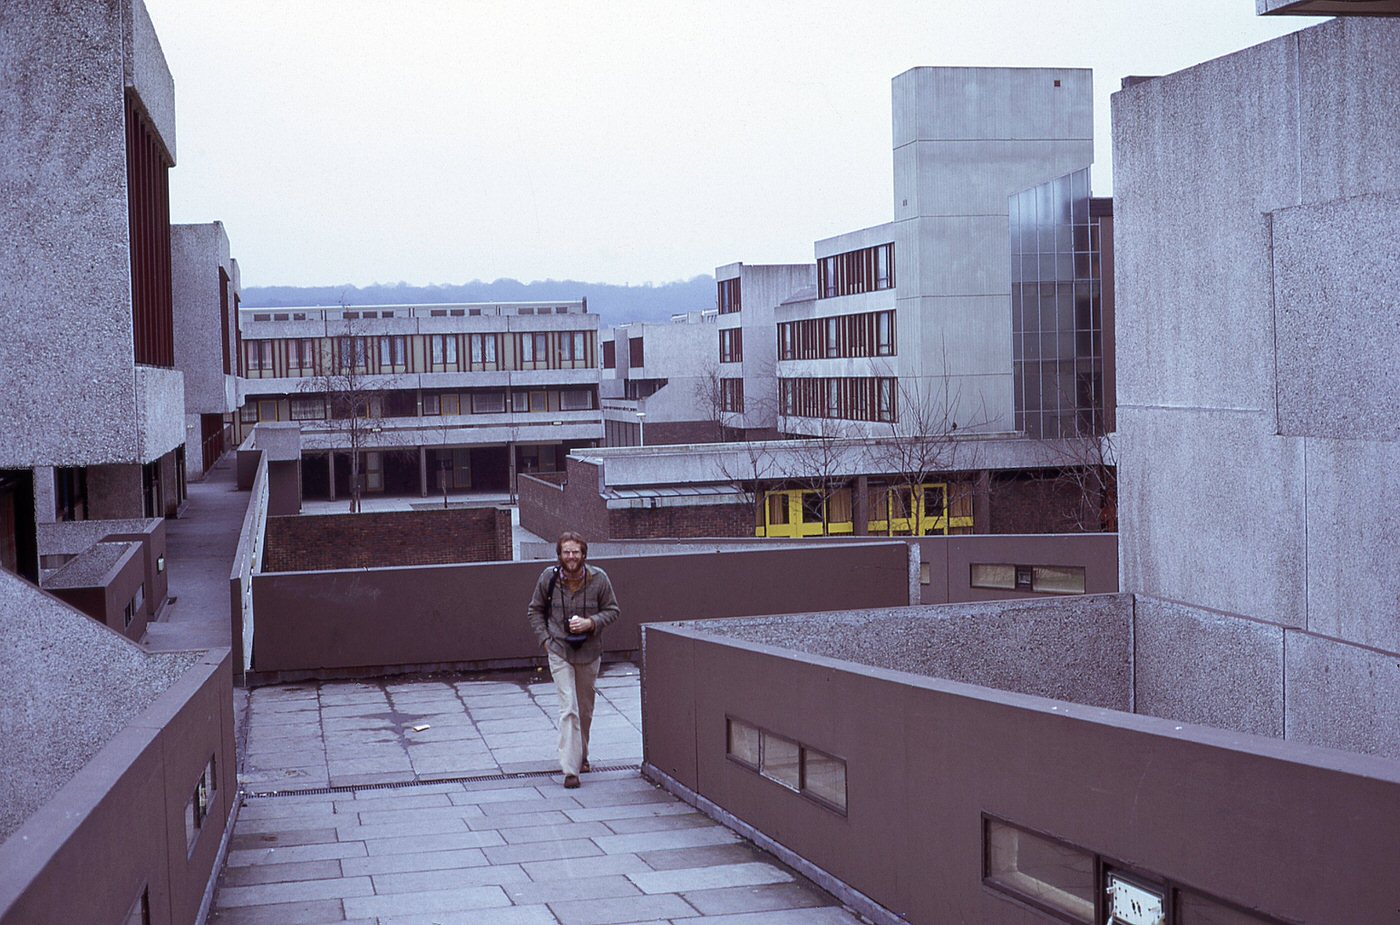 Thamesmead 1975: London's Lofty Concrete Dream Turned Sour